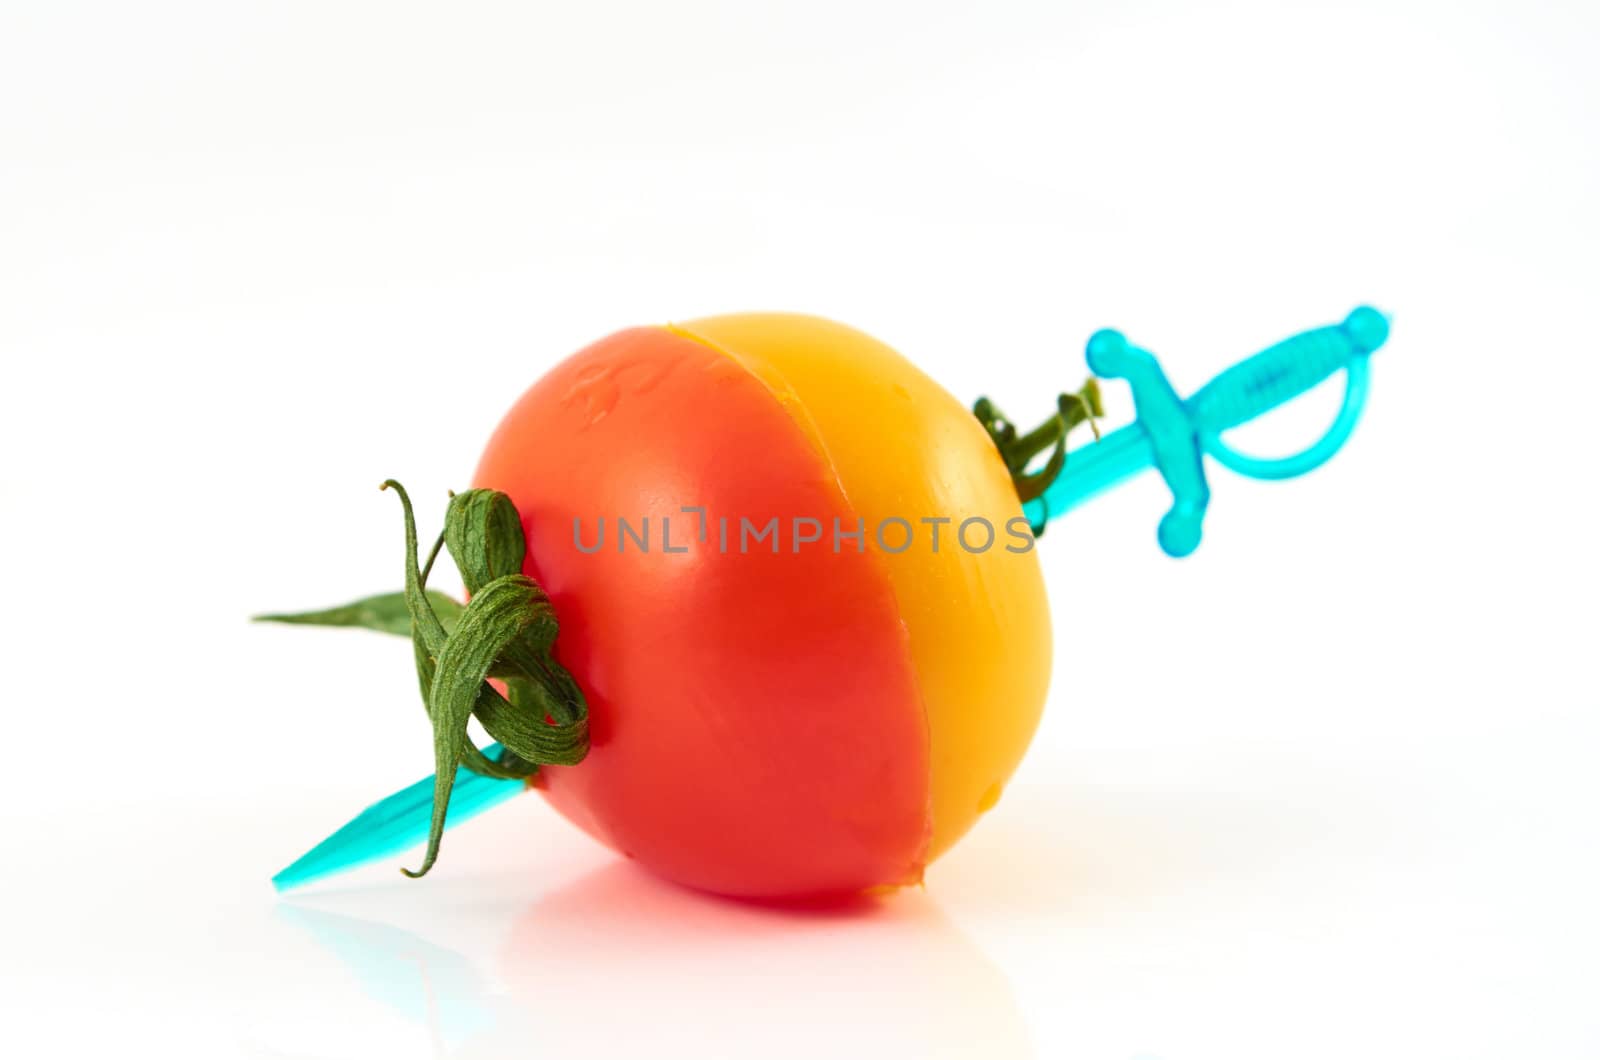 Juicy ripe yellow tomato  on a white background